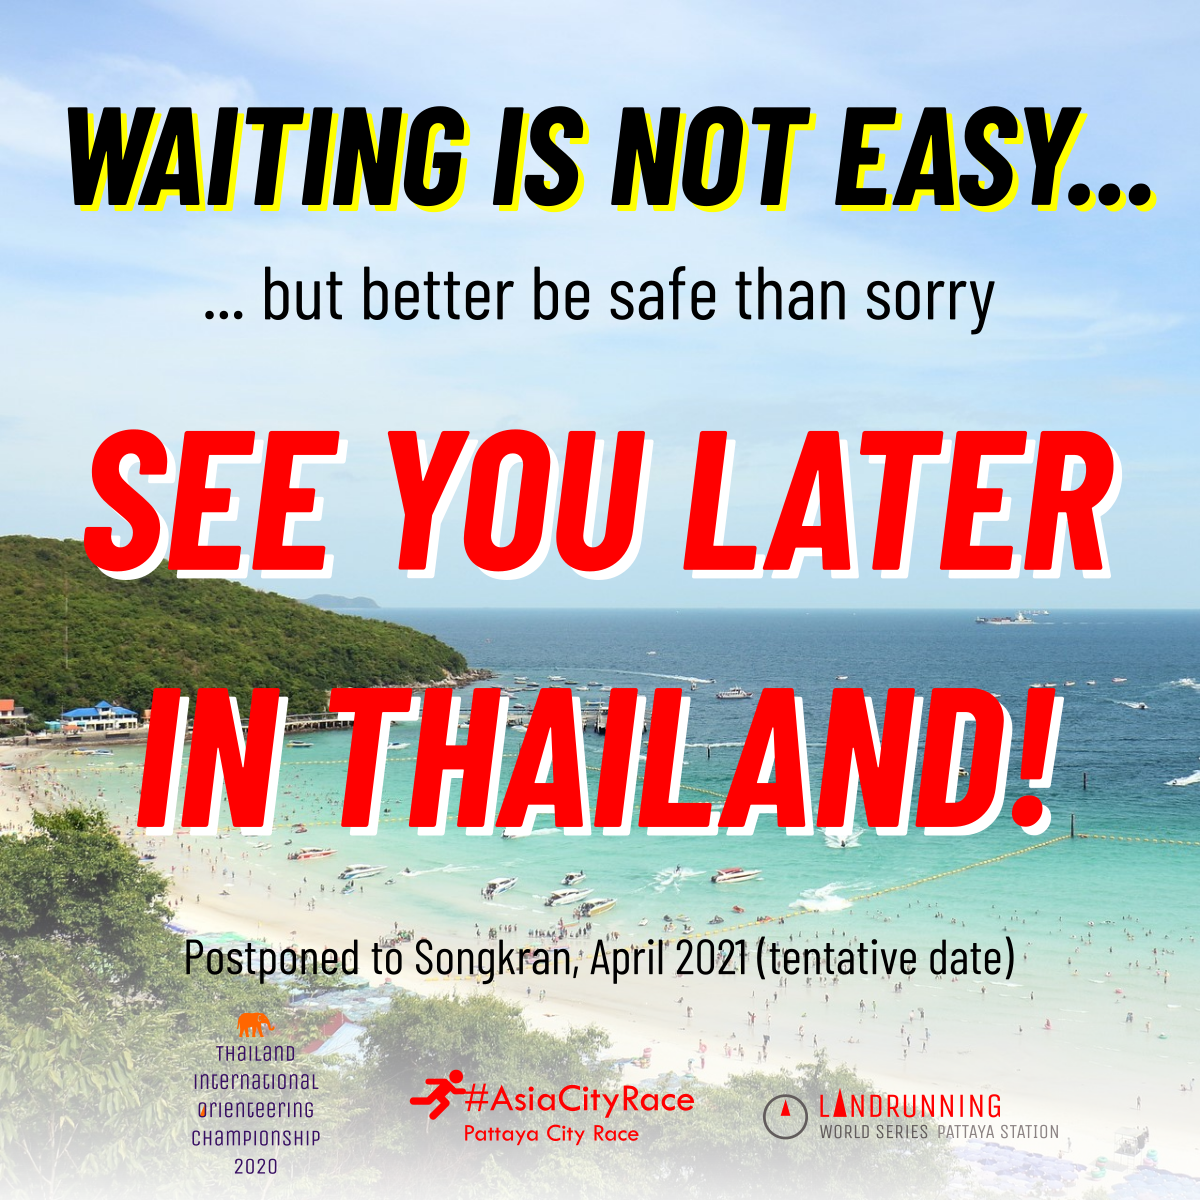 Thailand International Orienteering Championship postponed to Songkran 2021 (tentative dates)